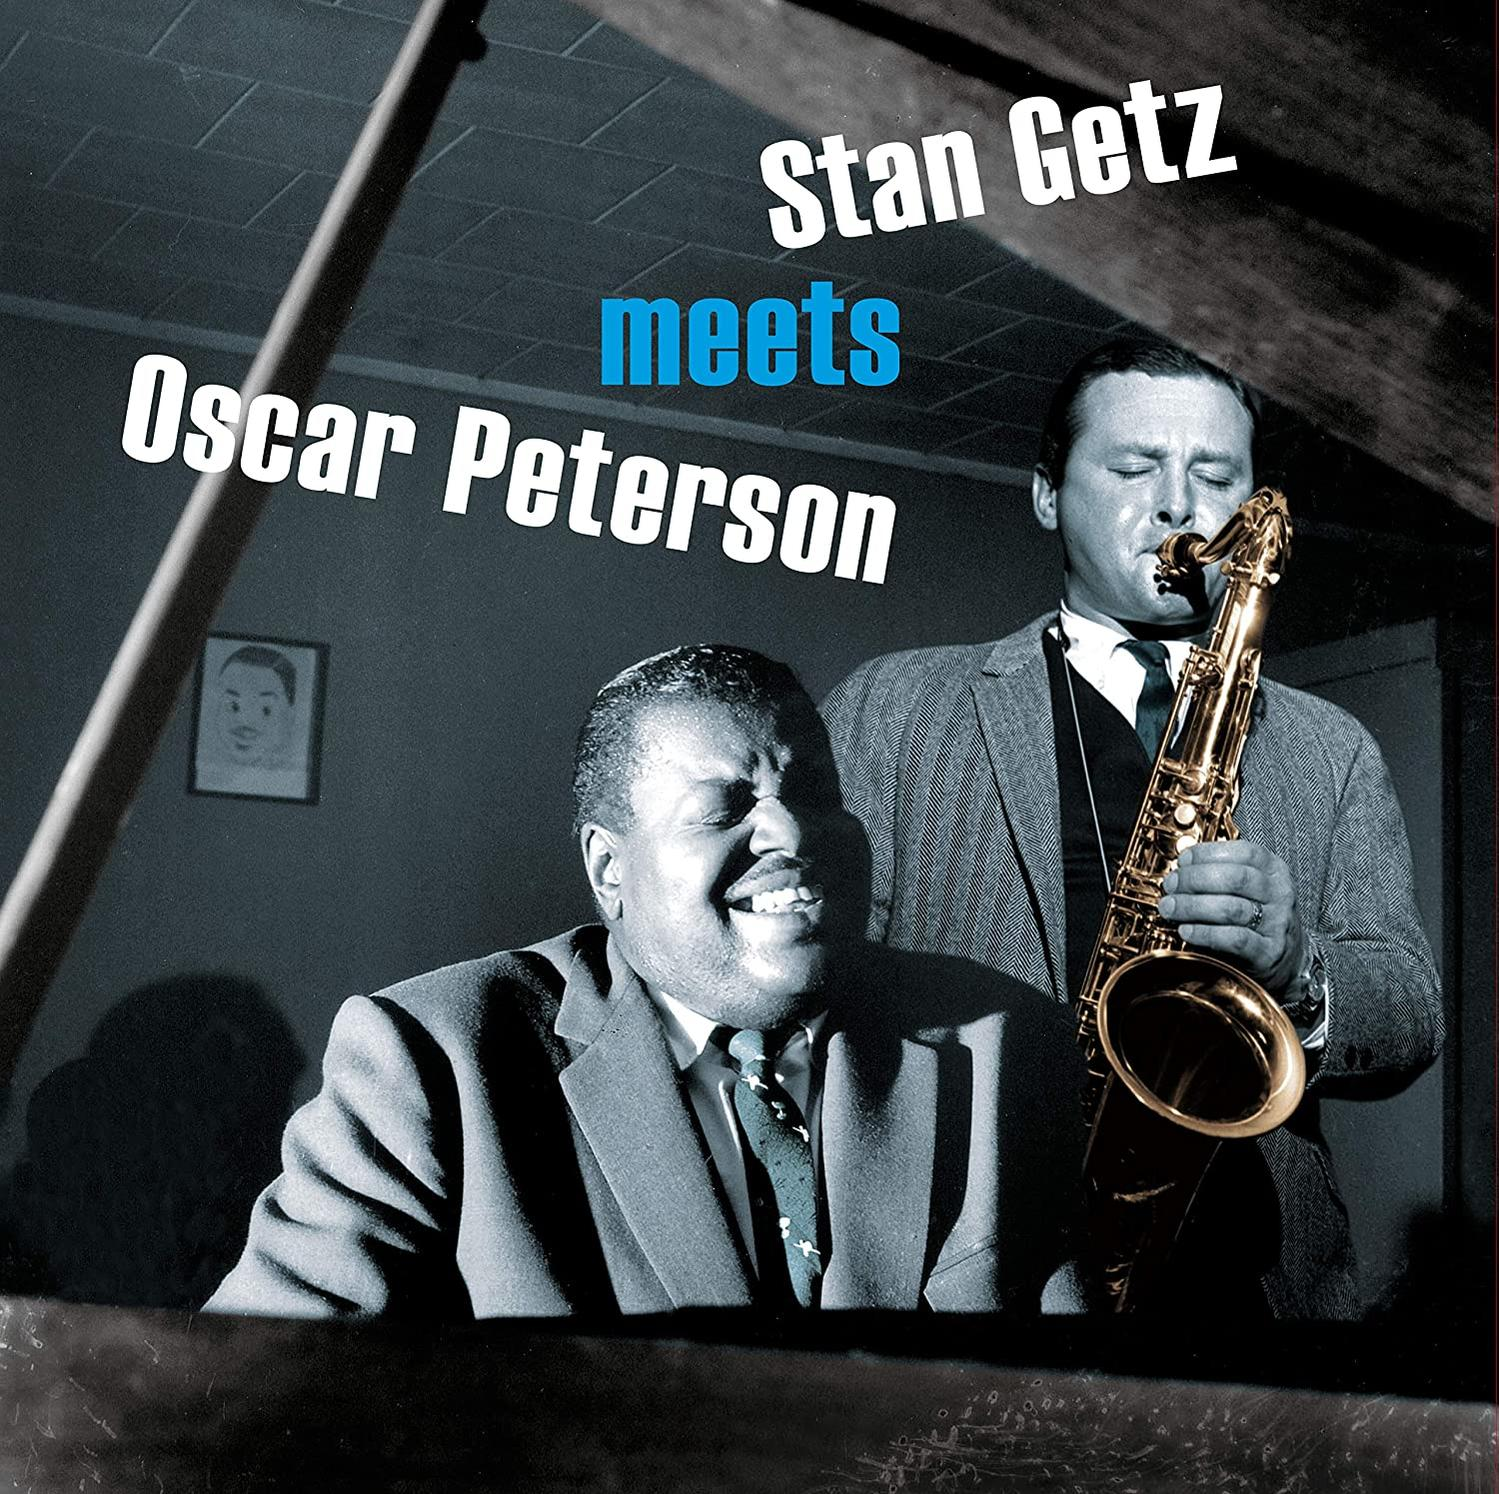 Stan Getz, Oscar Peterson - OSCAR - (Vinyl) PETERSON GETZ STAN MEETS